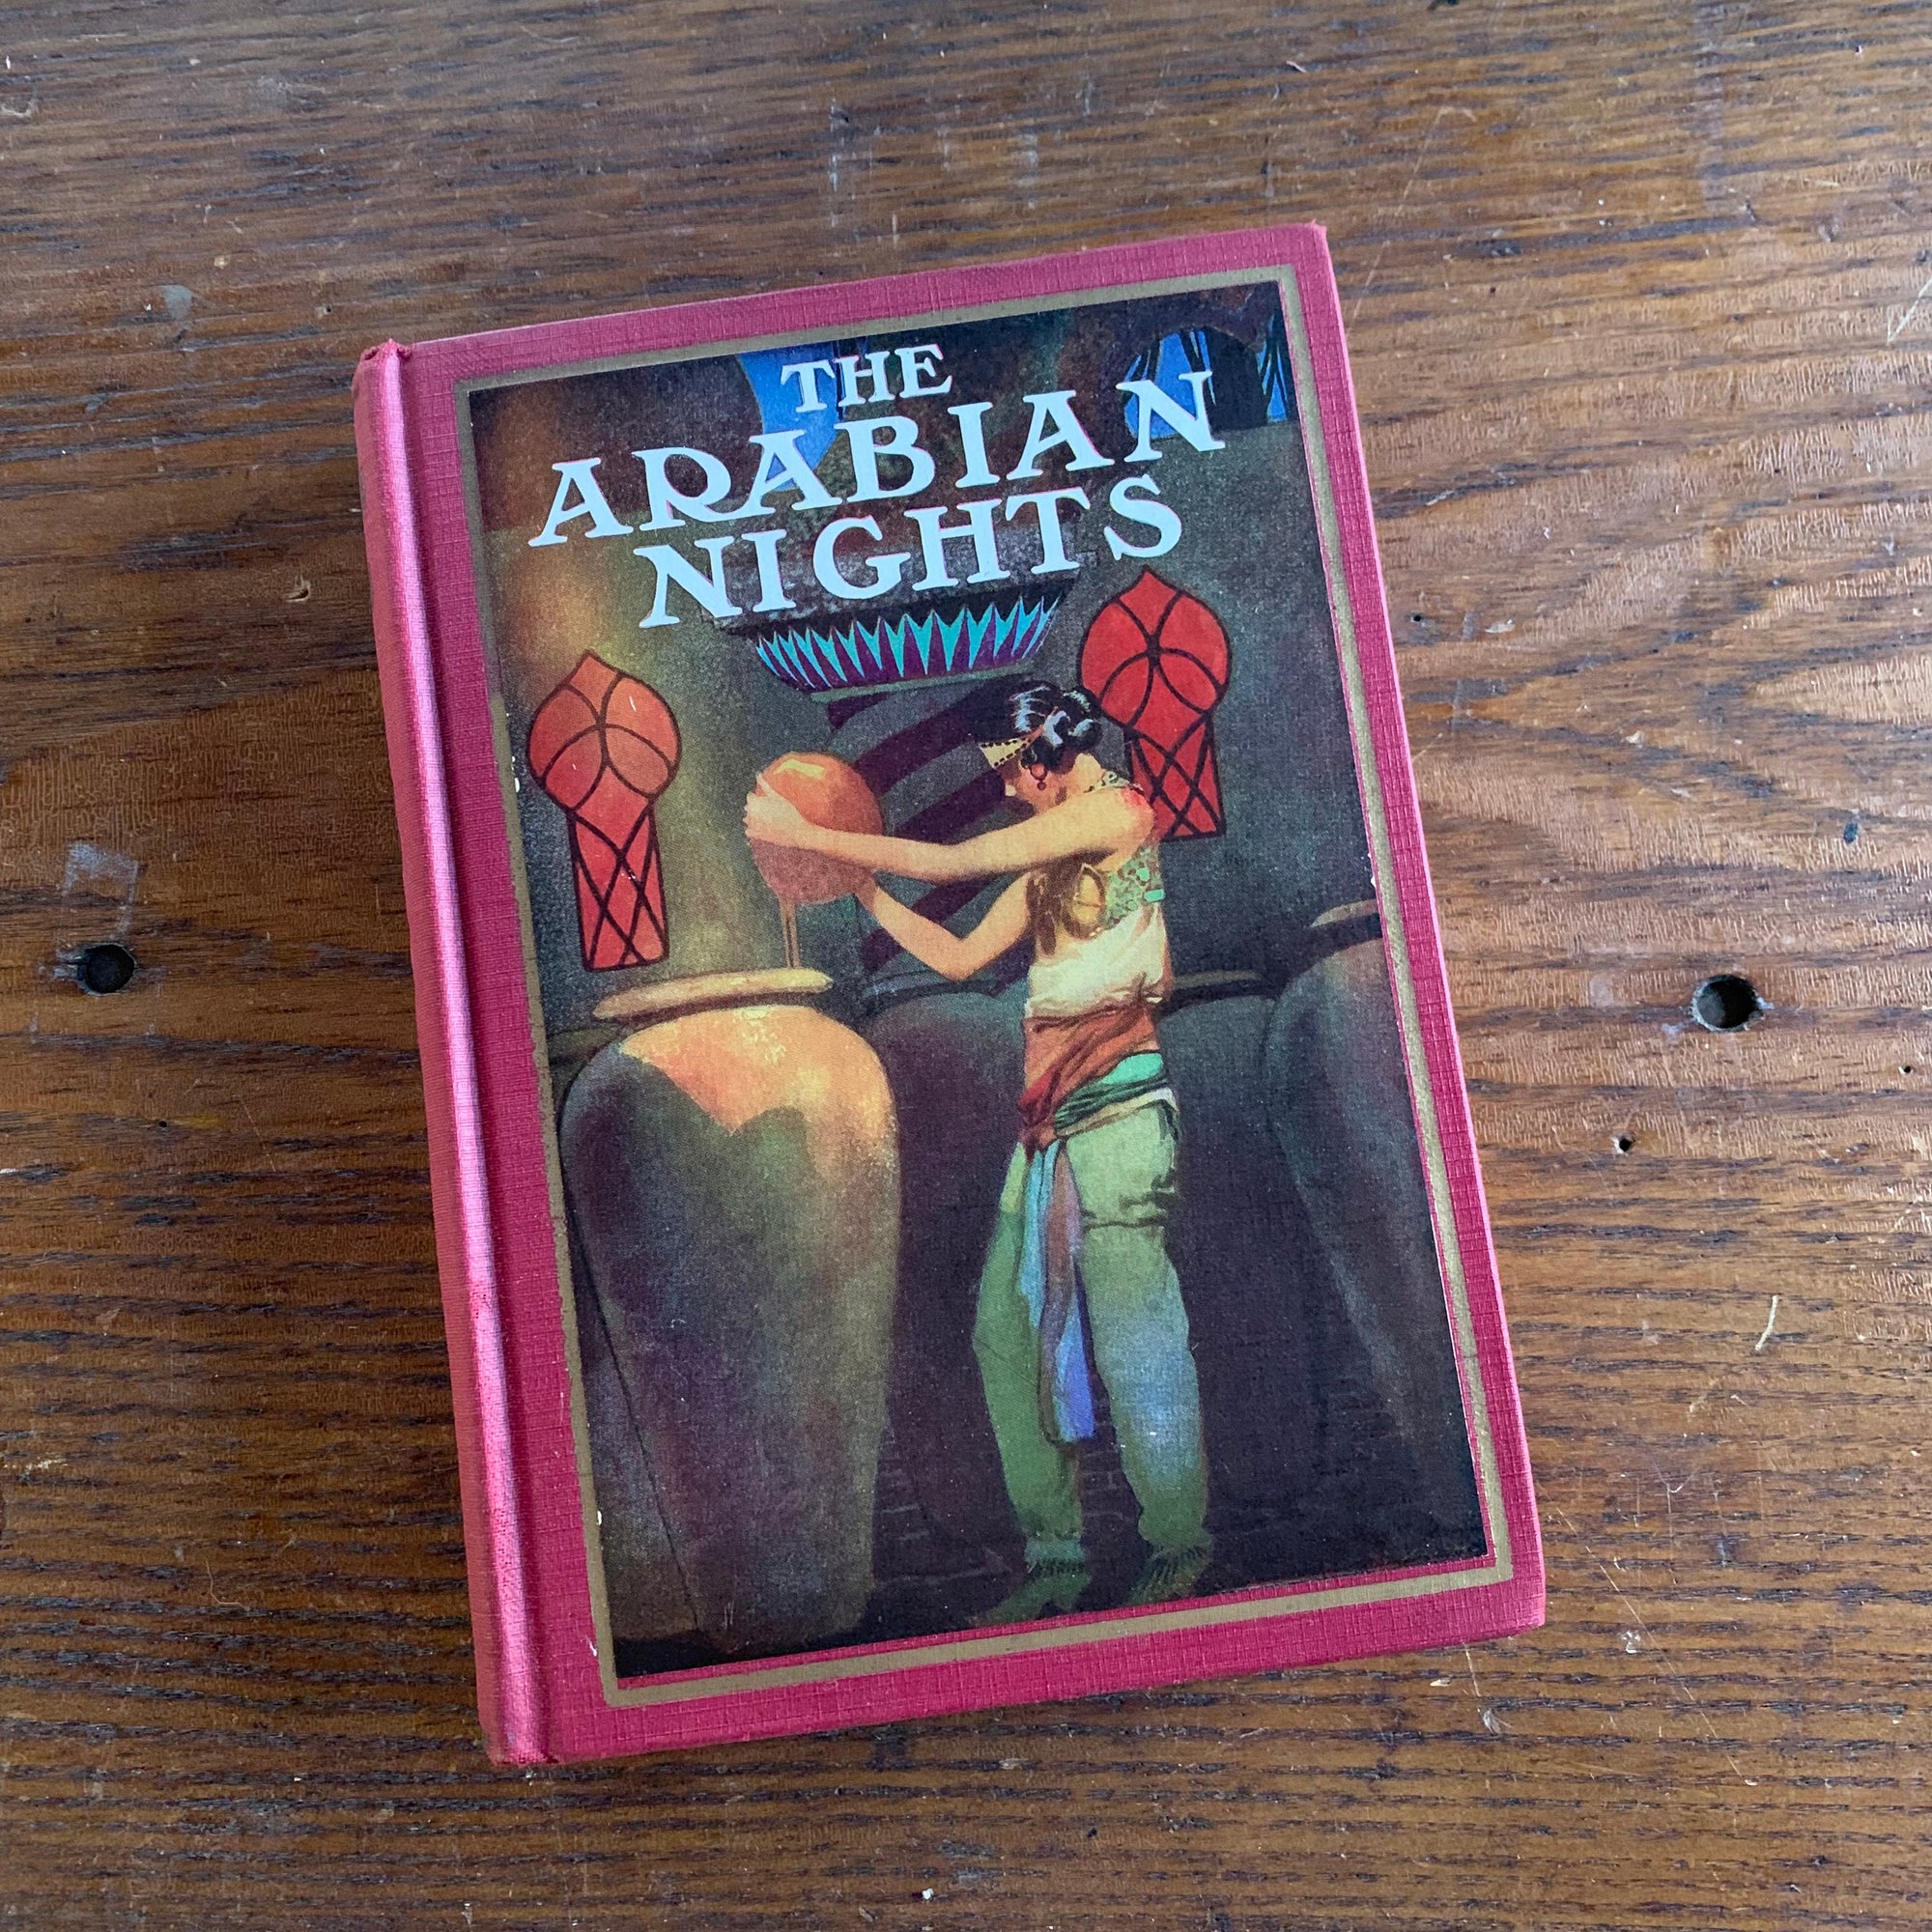 The Arabian Nights - 1925 John C. Winston Company Clothbound Hardcover Edition